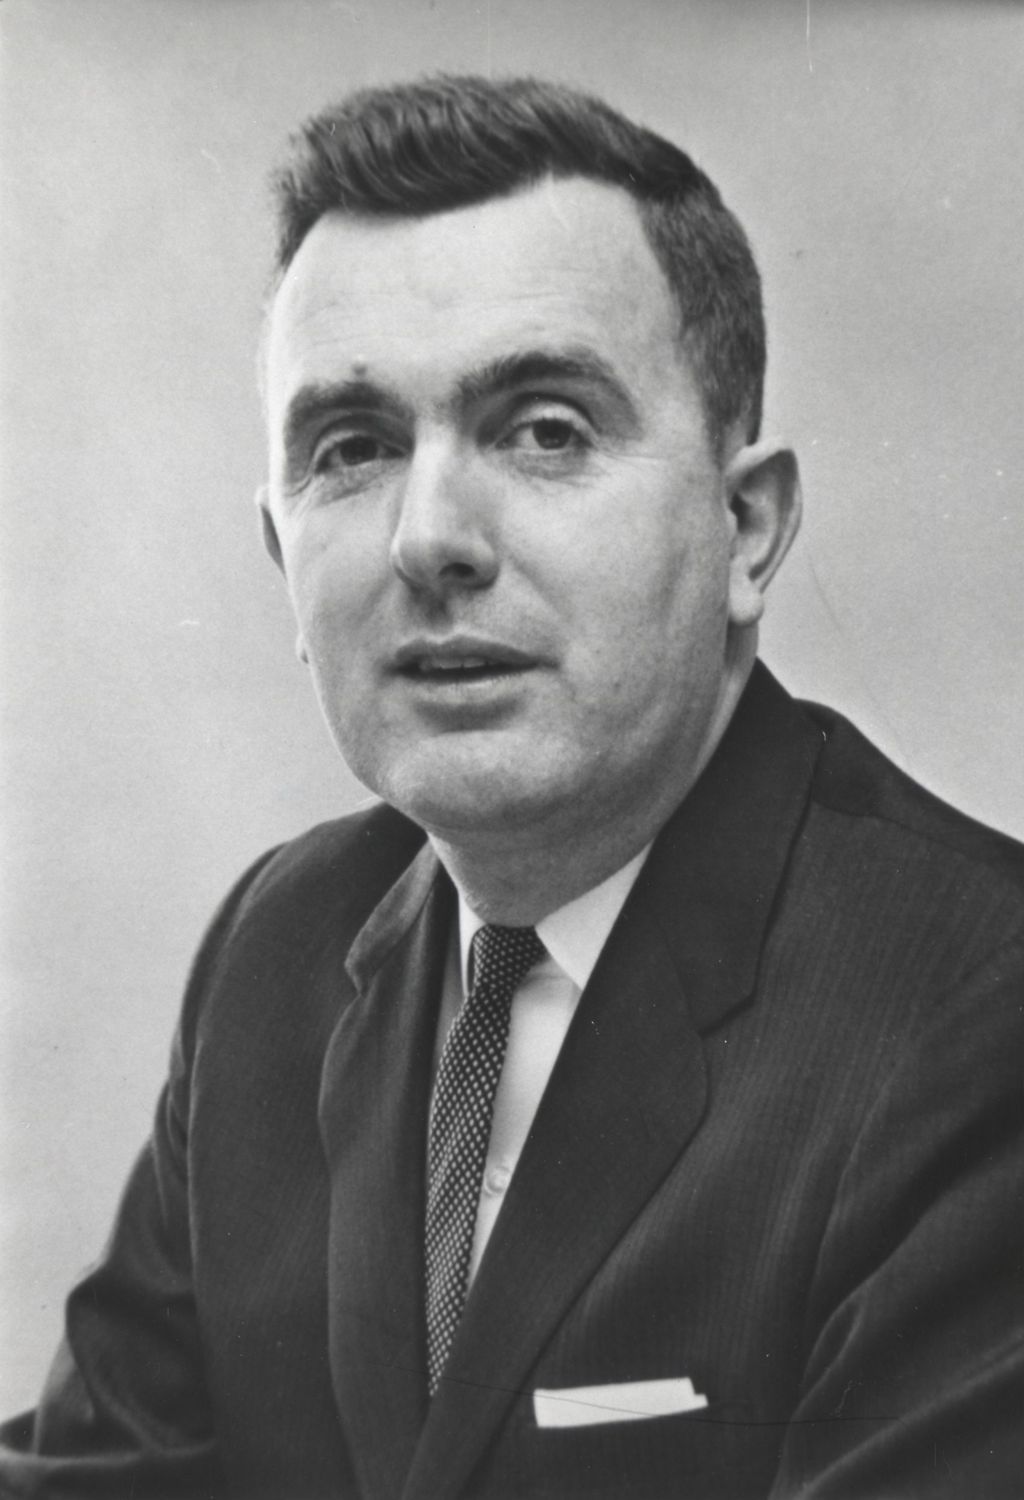 Robert T. Adams, Executive Director of the Hull-House Association